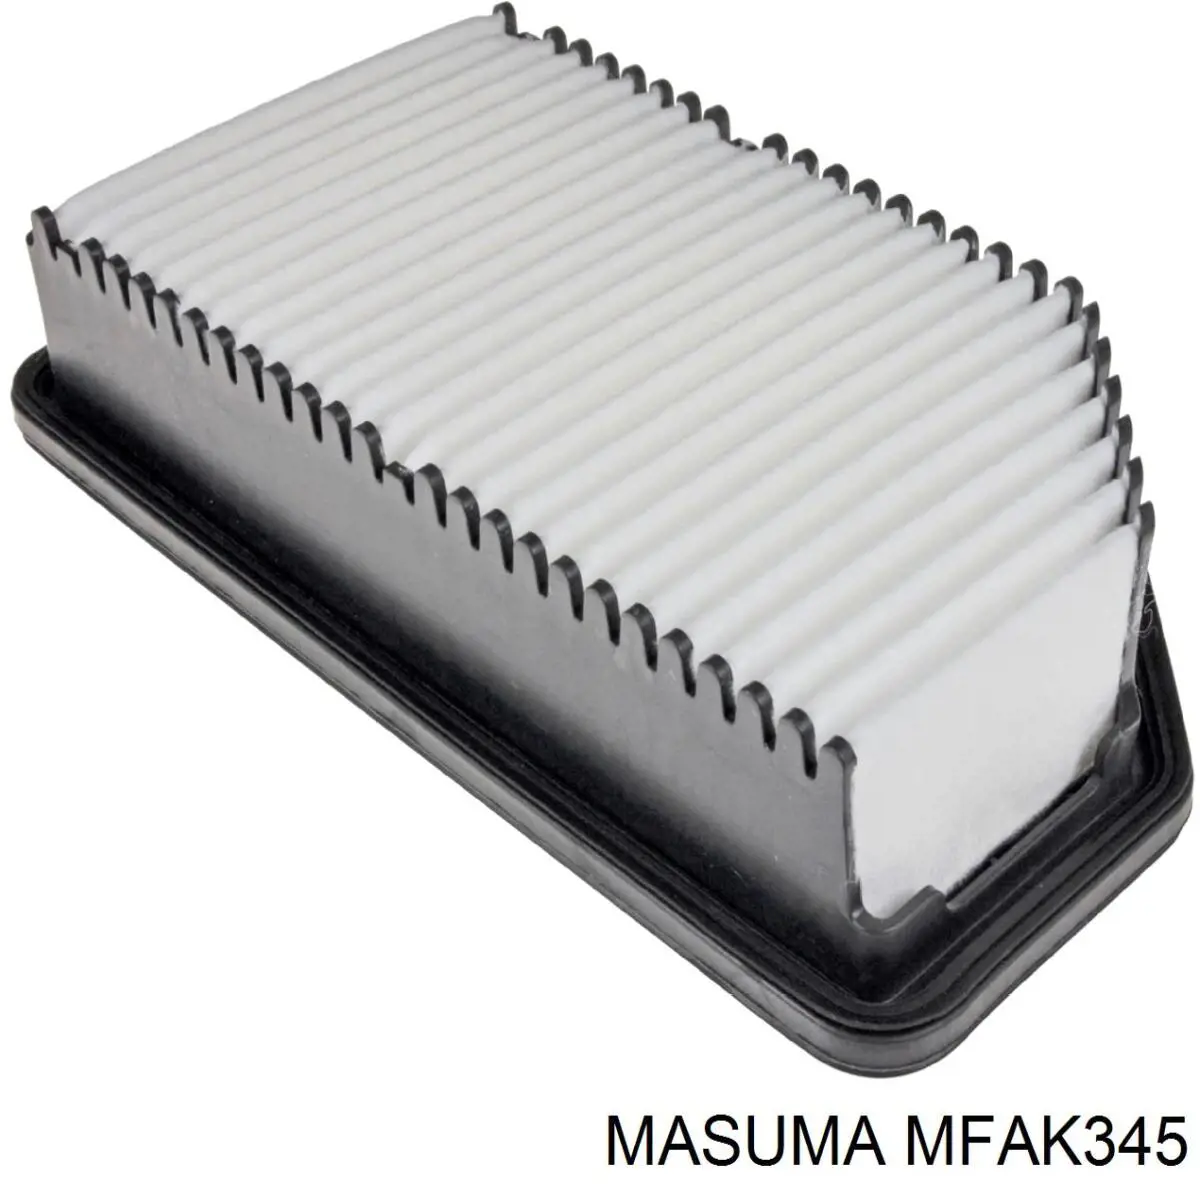 MFAK345 Masuma filtro de aire